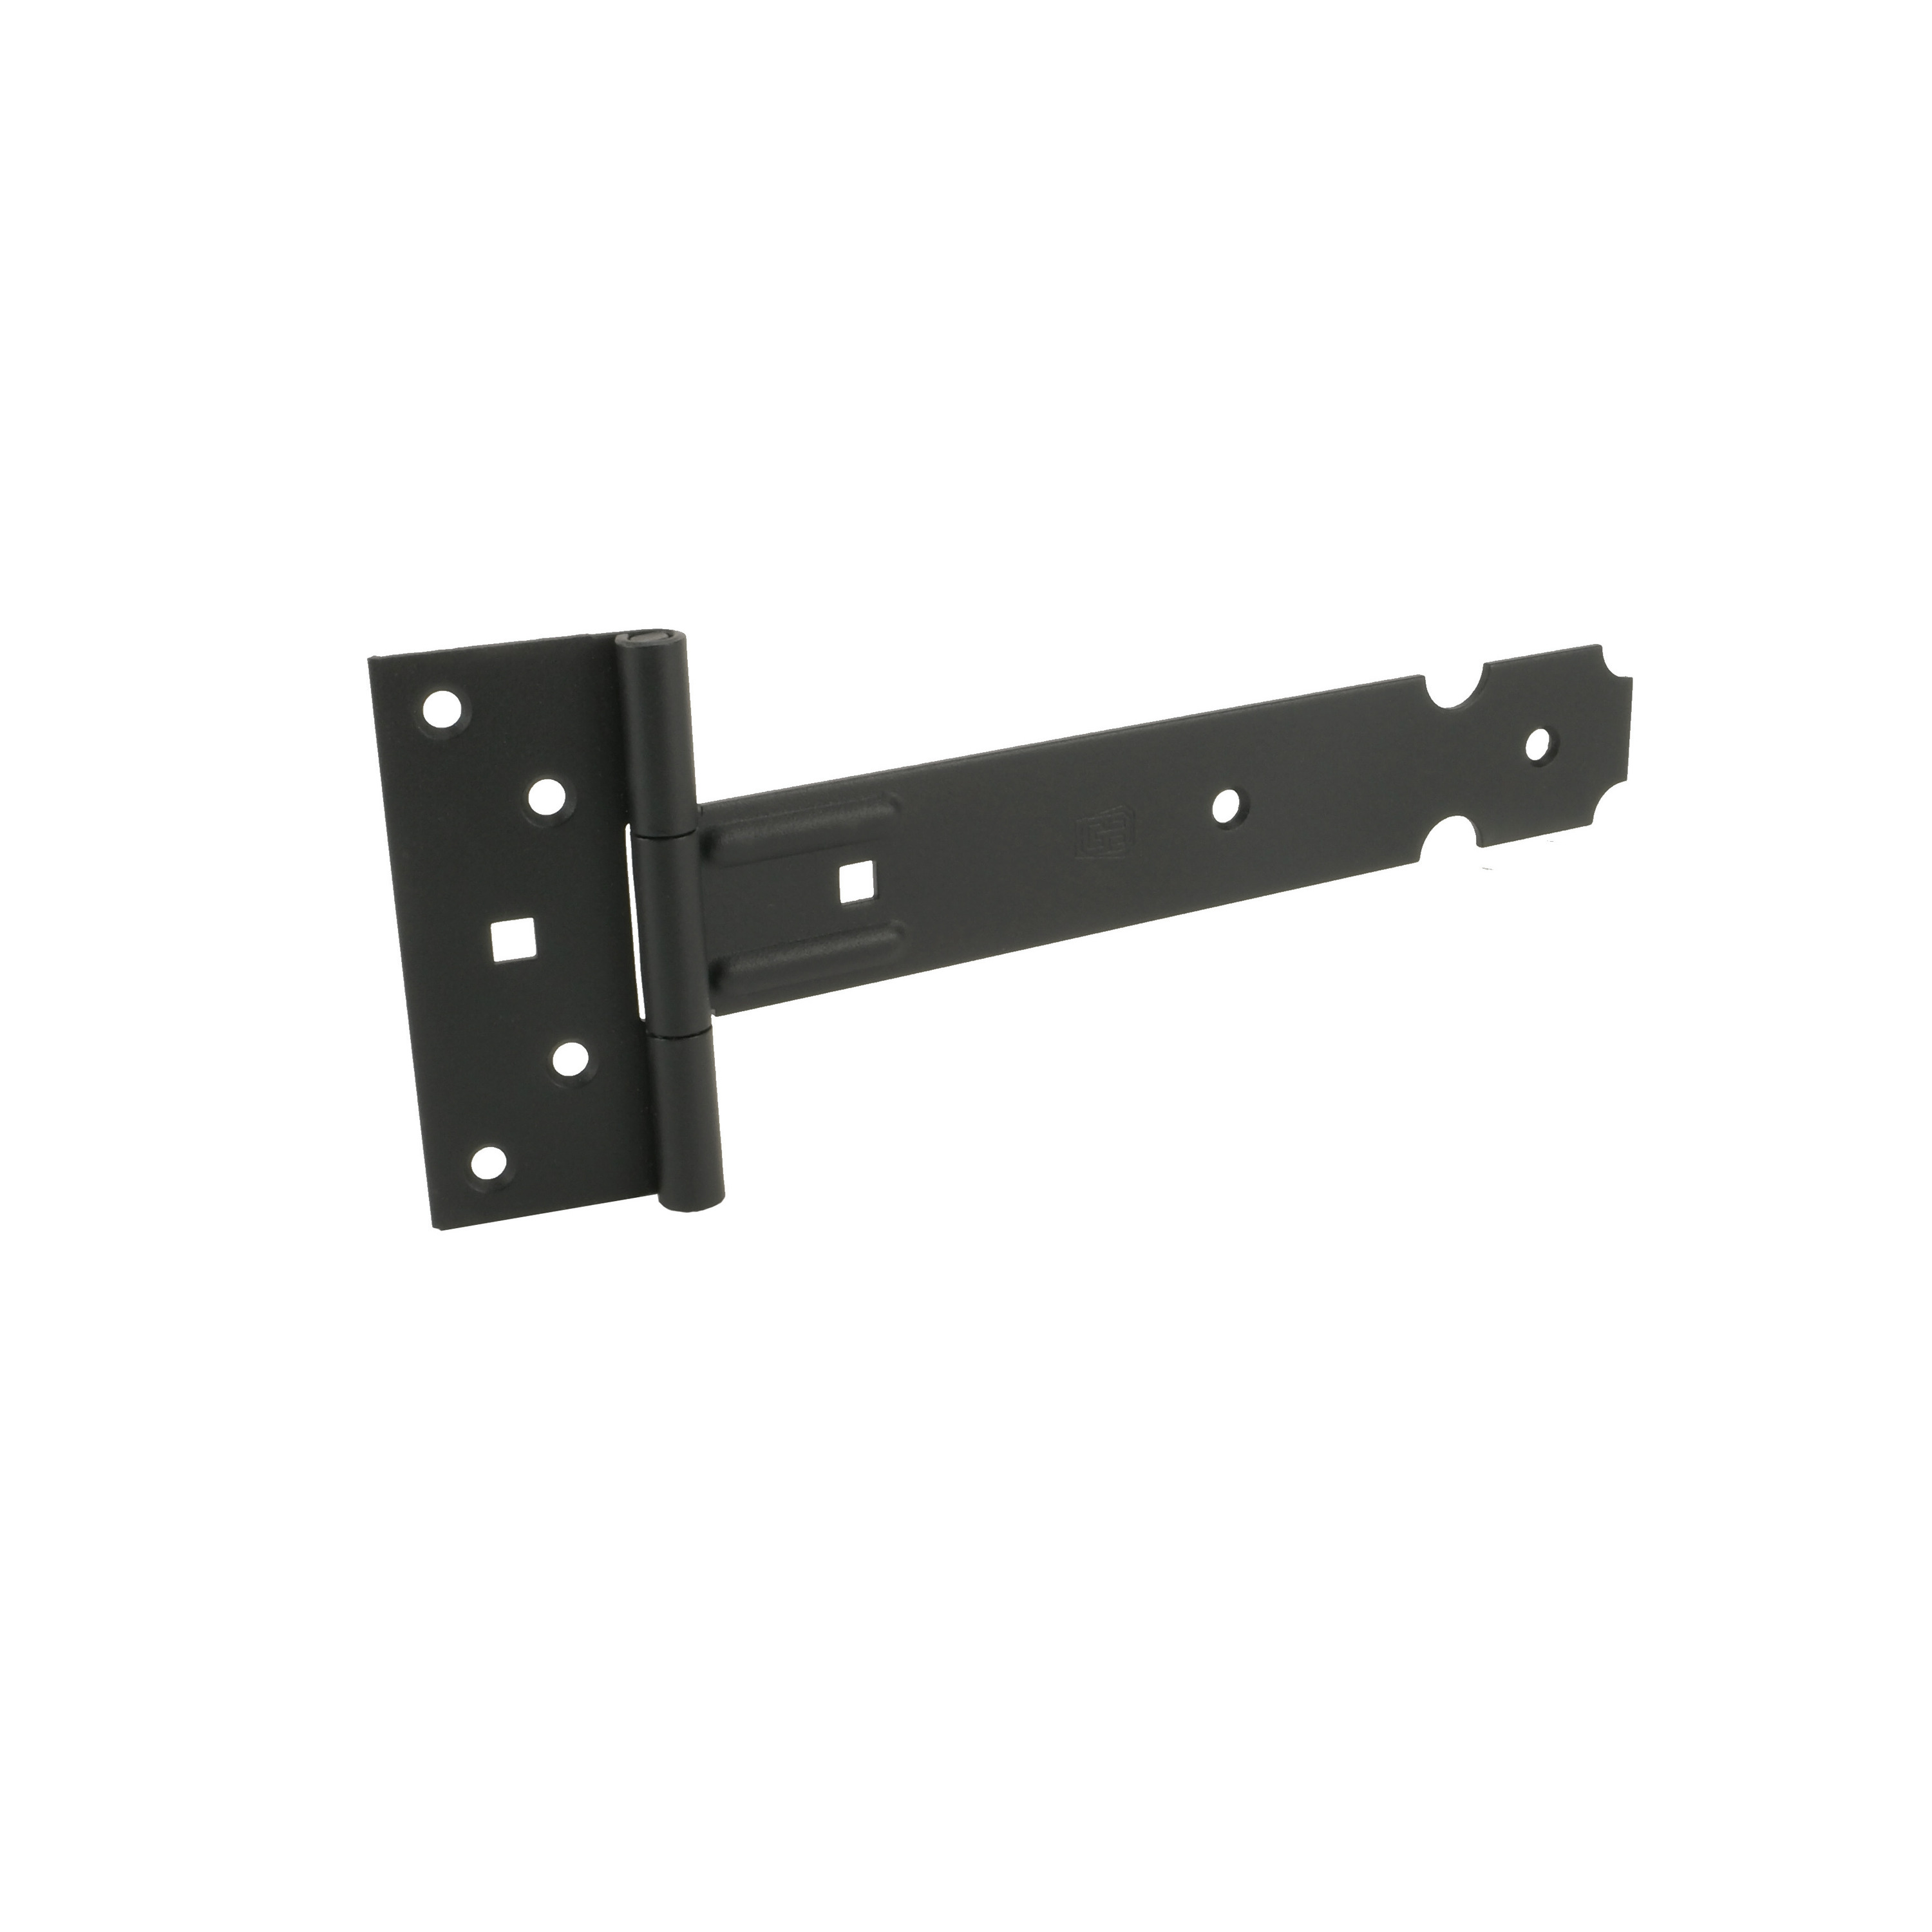 1x Zwarte poortscharnieren-hekwerk -kruisheng scharnieren staal epoxy 40 x 3.5 cm